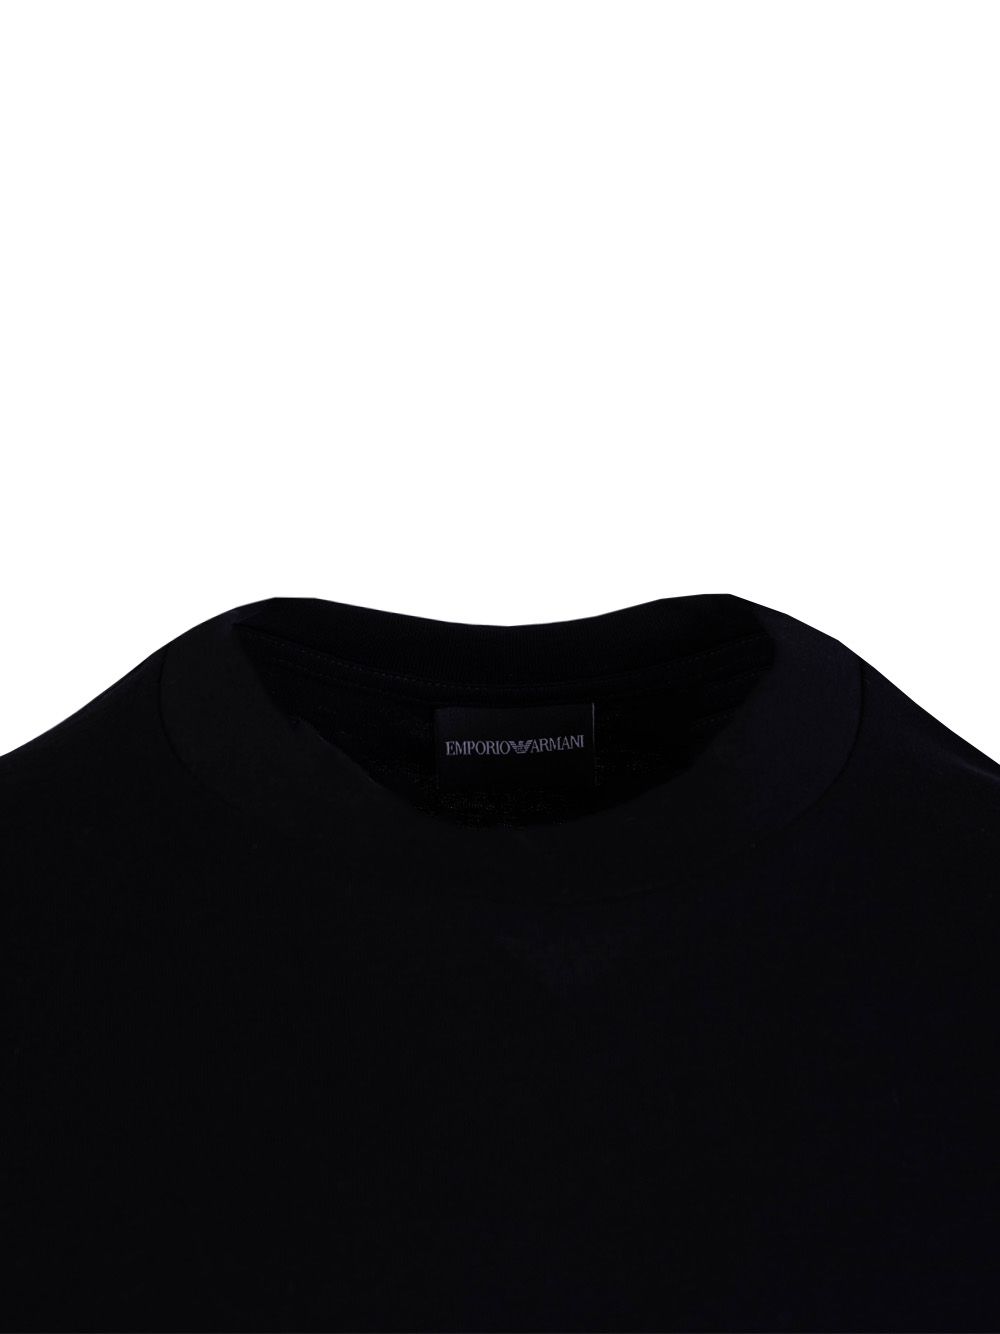 Fashionsarah.com Fashionsarah.com Emporio Armani Black T-Shirt Embroidery